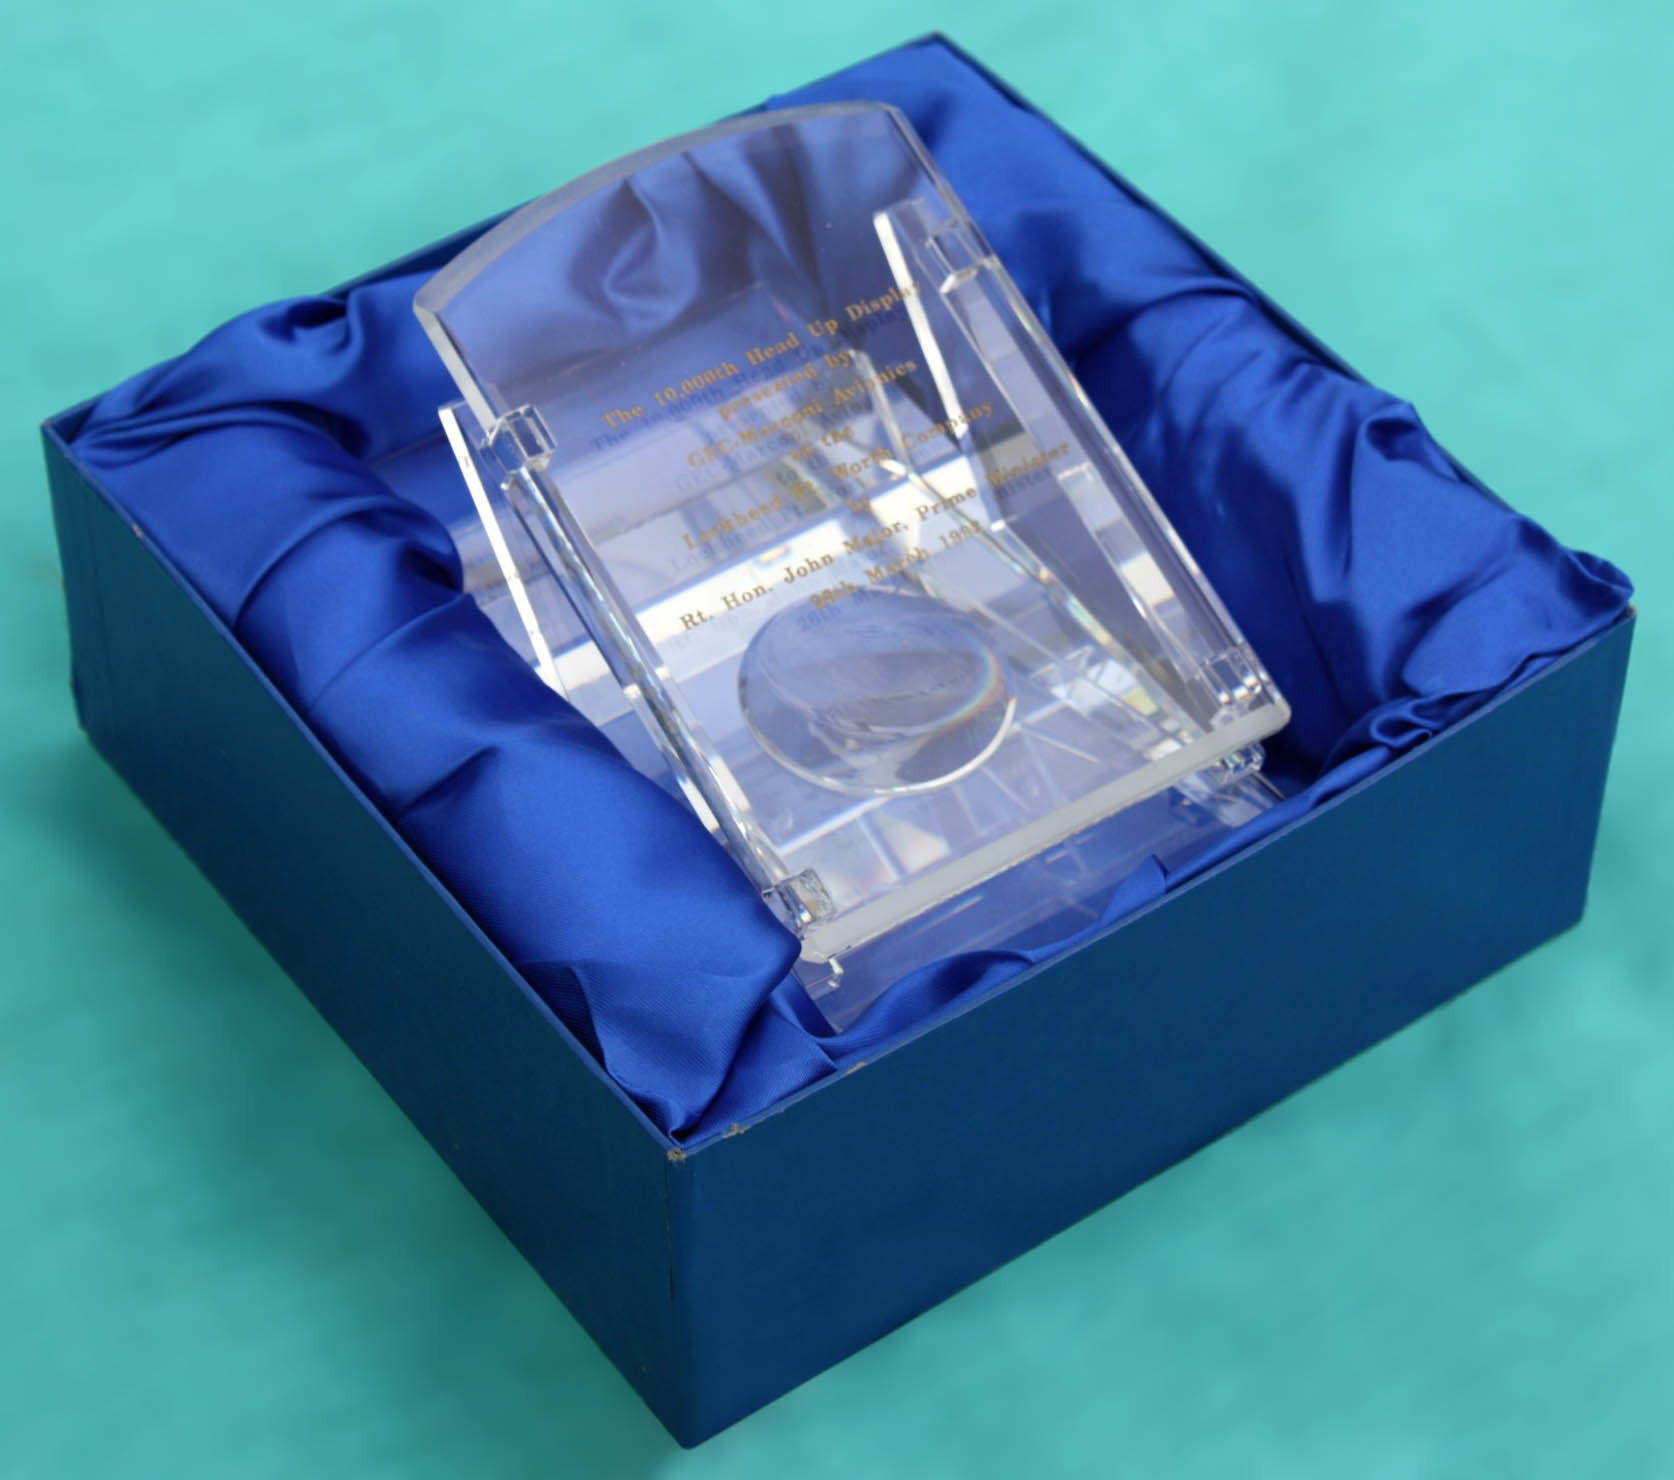 Presentation glass model for the 10,000th HUD